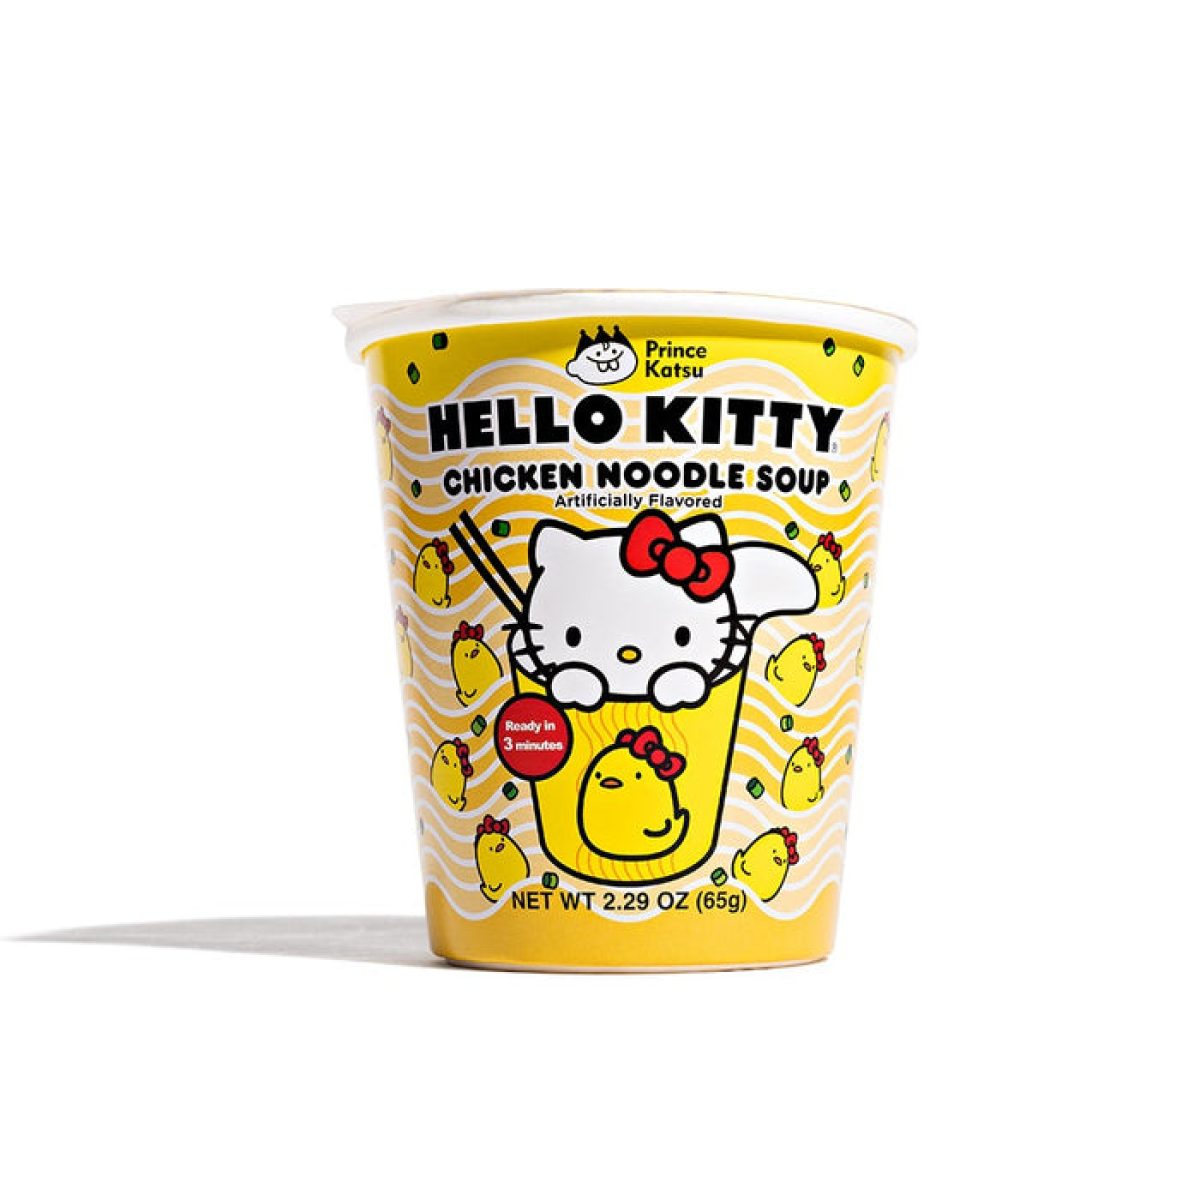 Hello Kitty - Hello Kitty added a new photo.